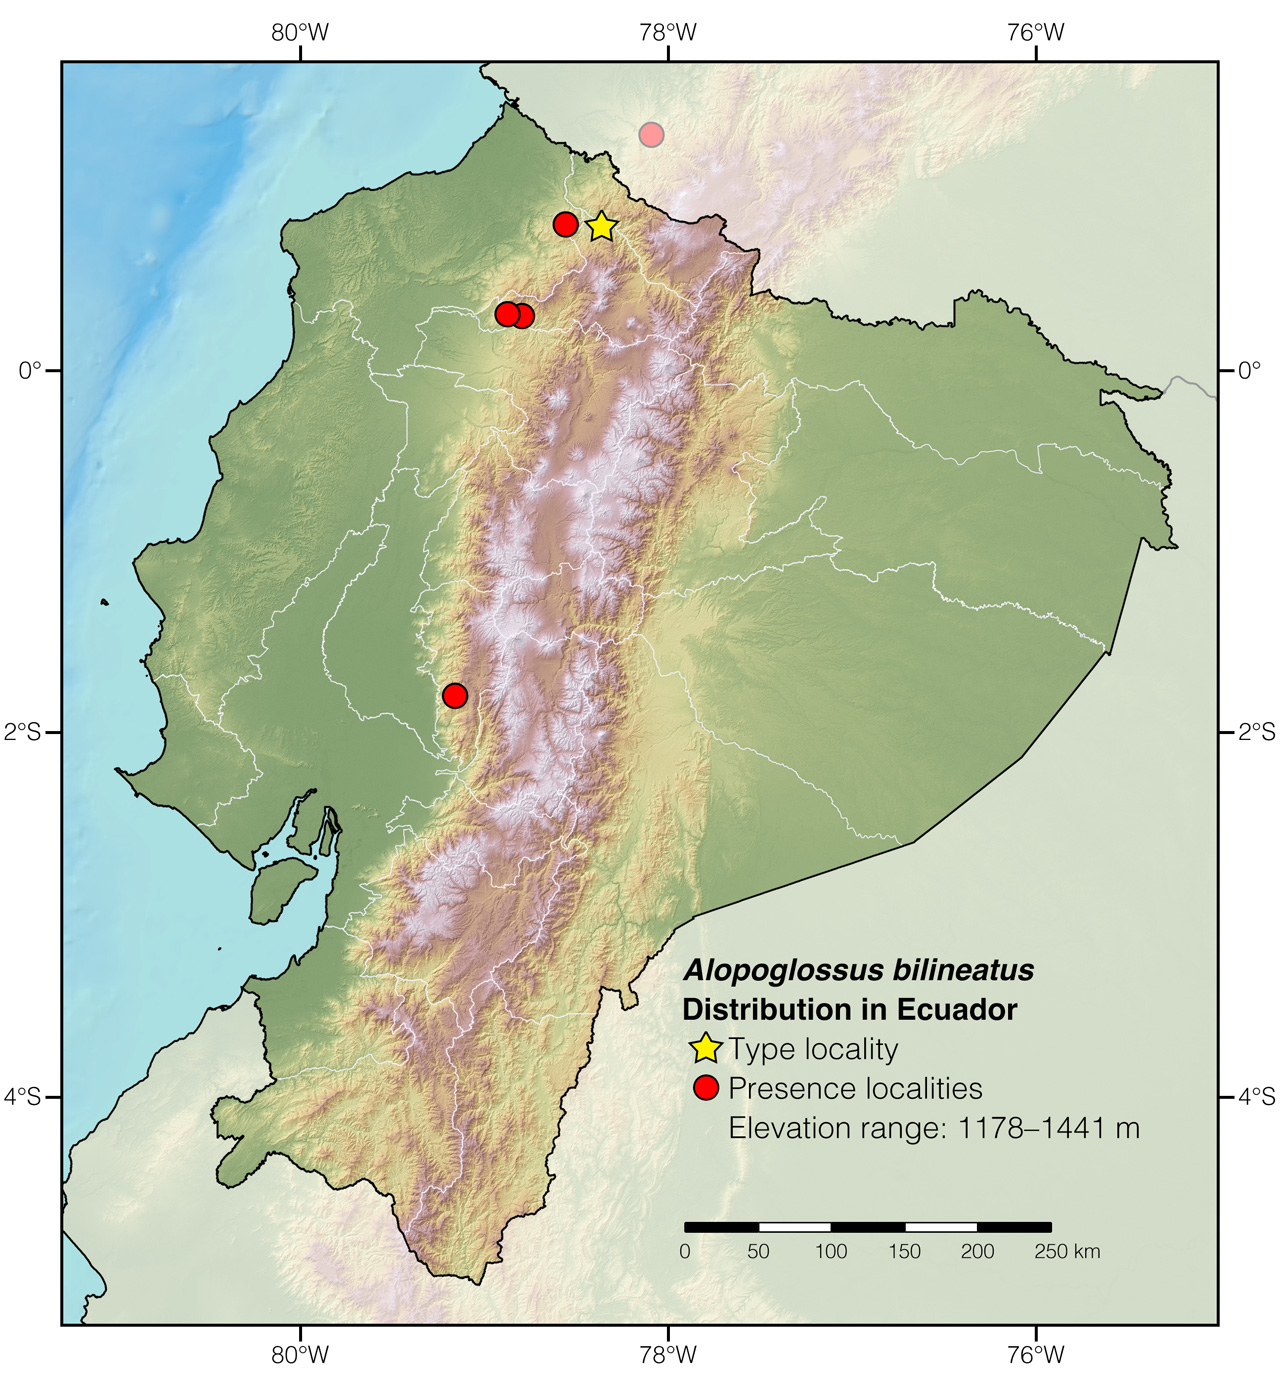 Distribution of Alopoglossus bilineatus in Ecuador